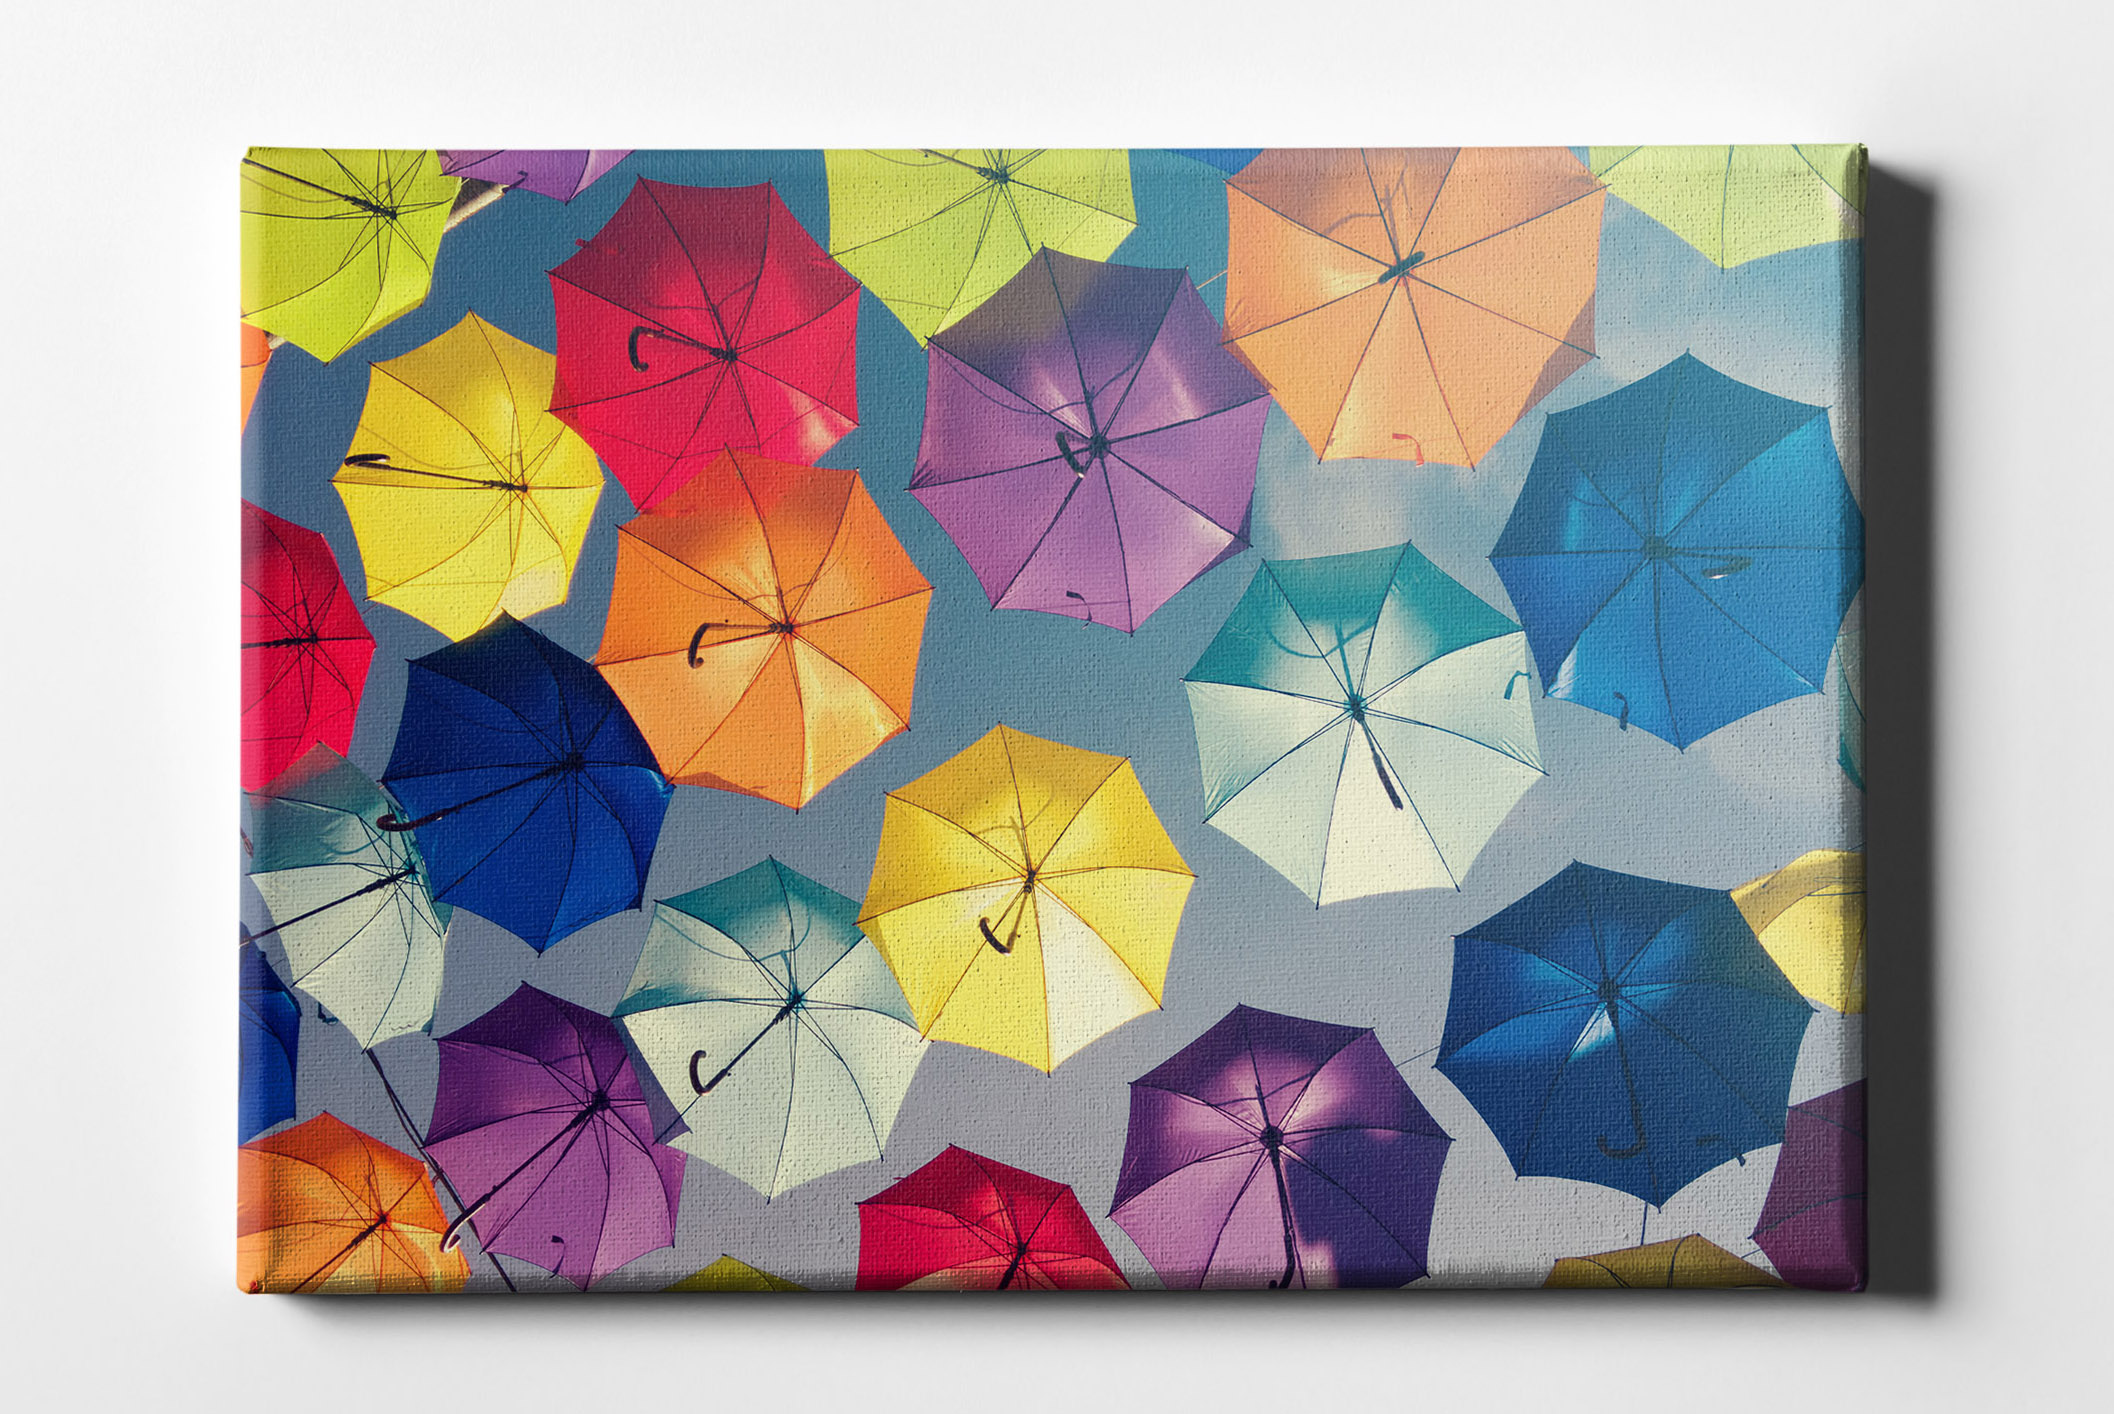 Farben Regenschirme bunt am Himmel Leinwand L0175